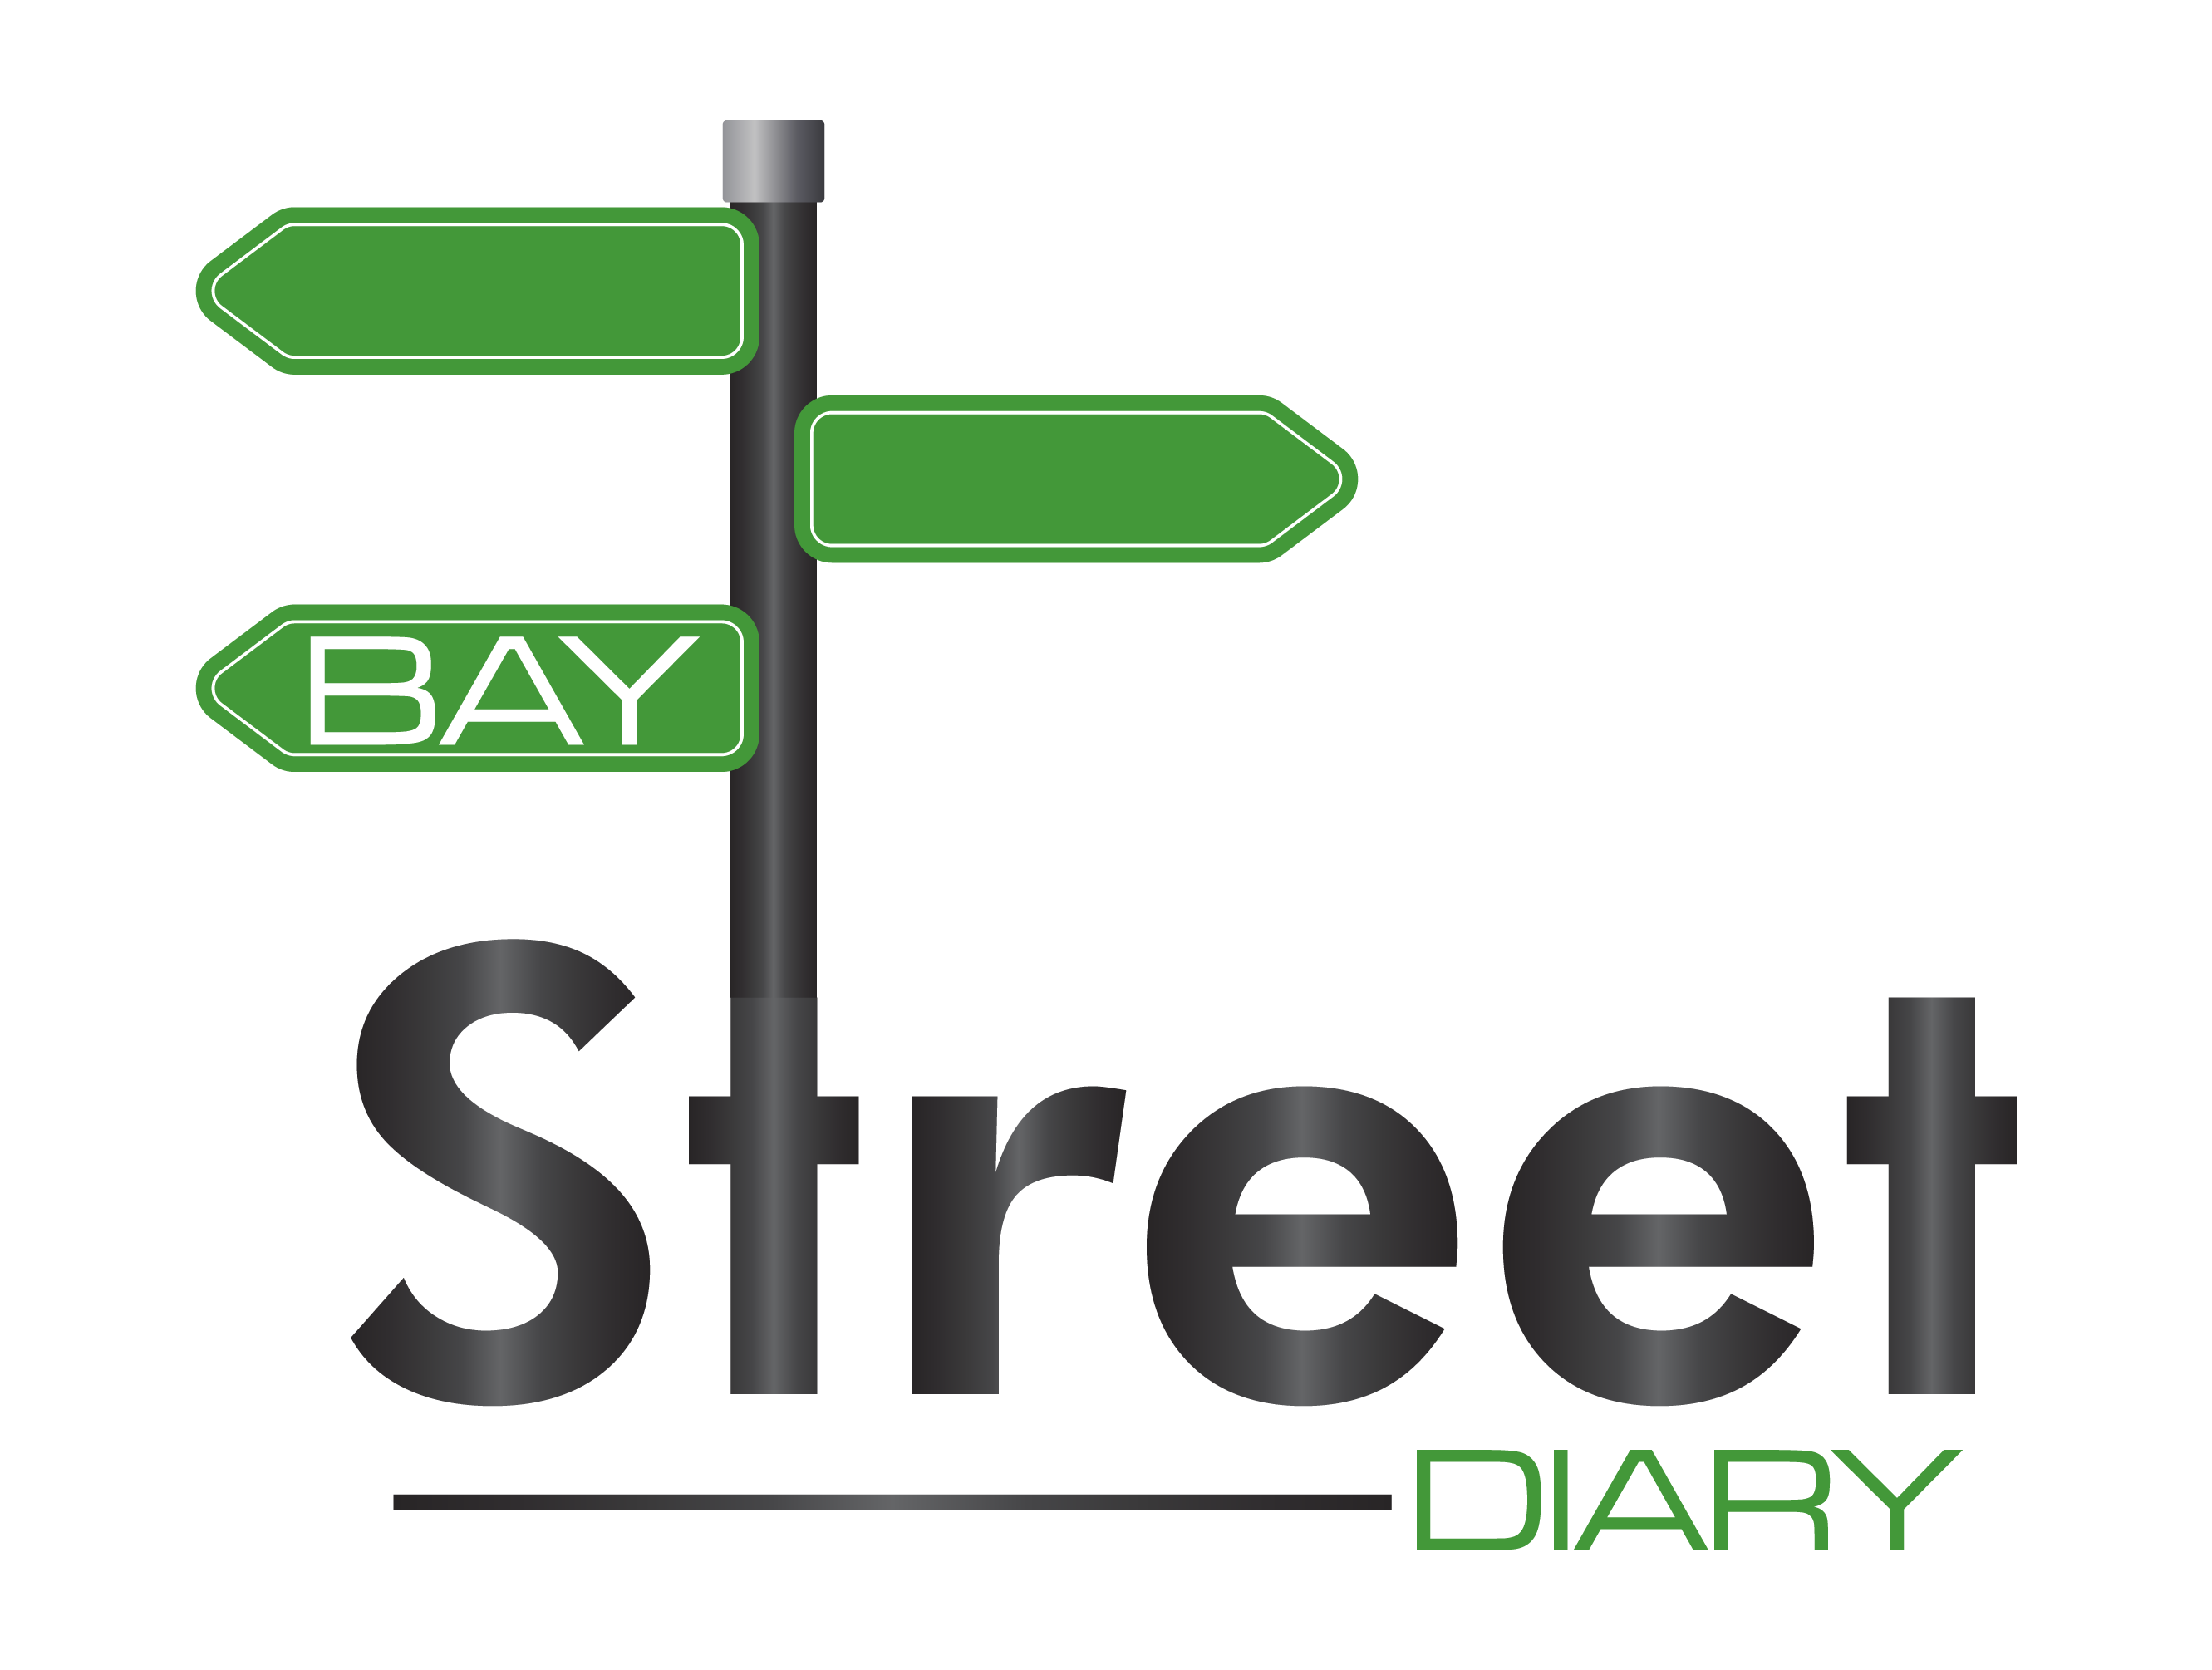 Bay Street Diary and